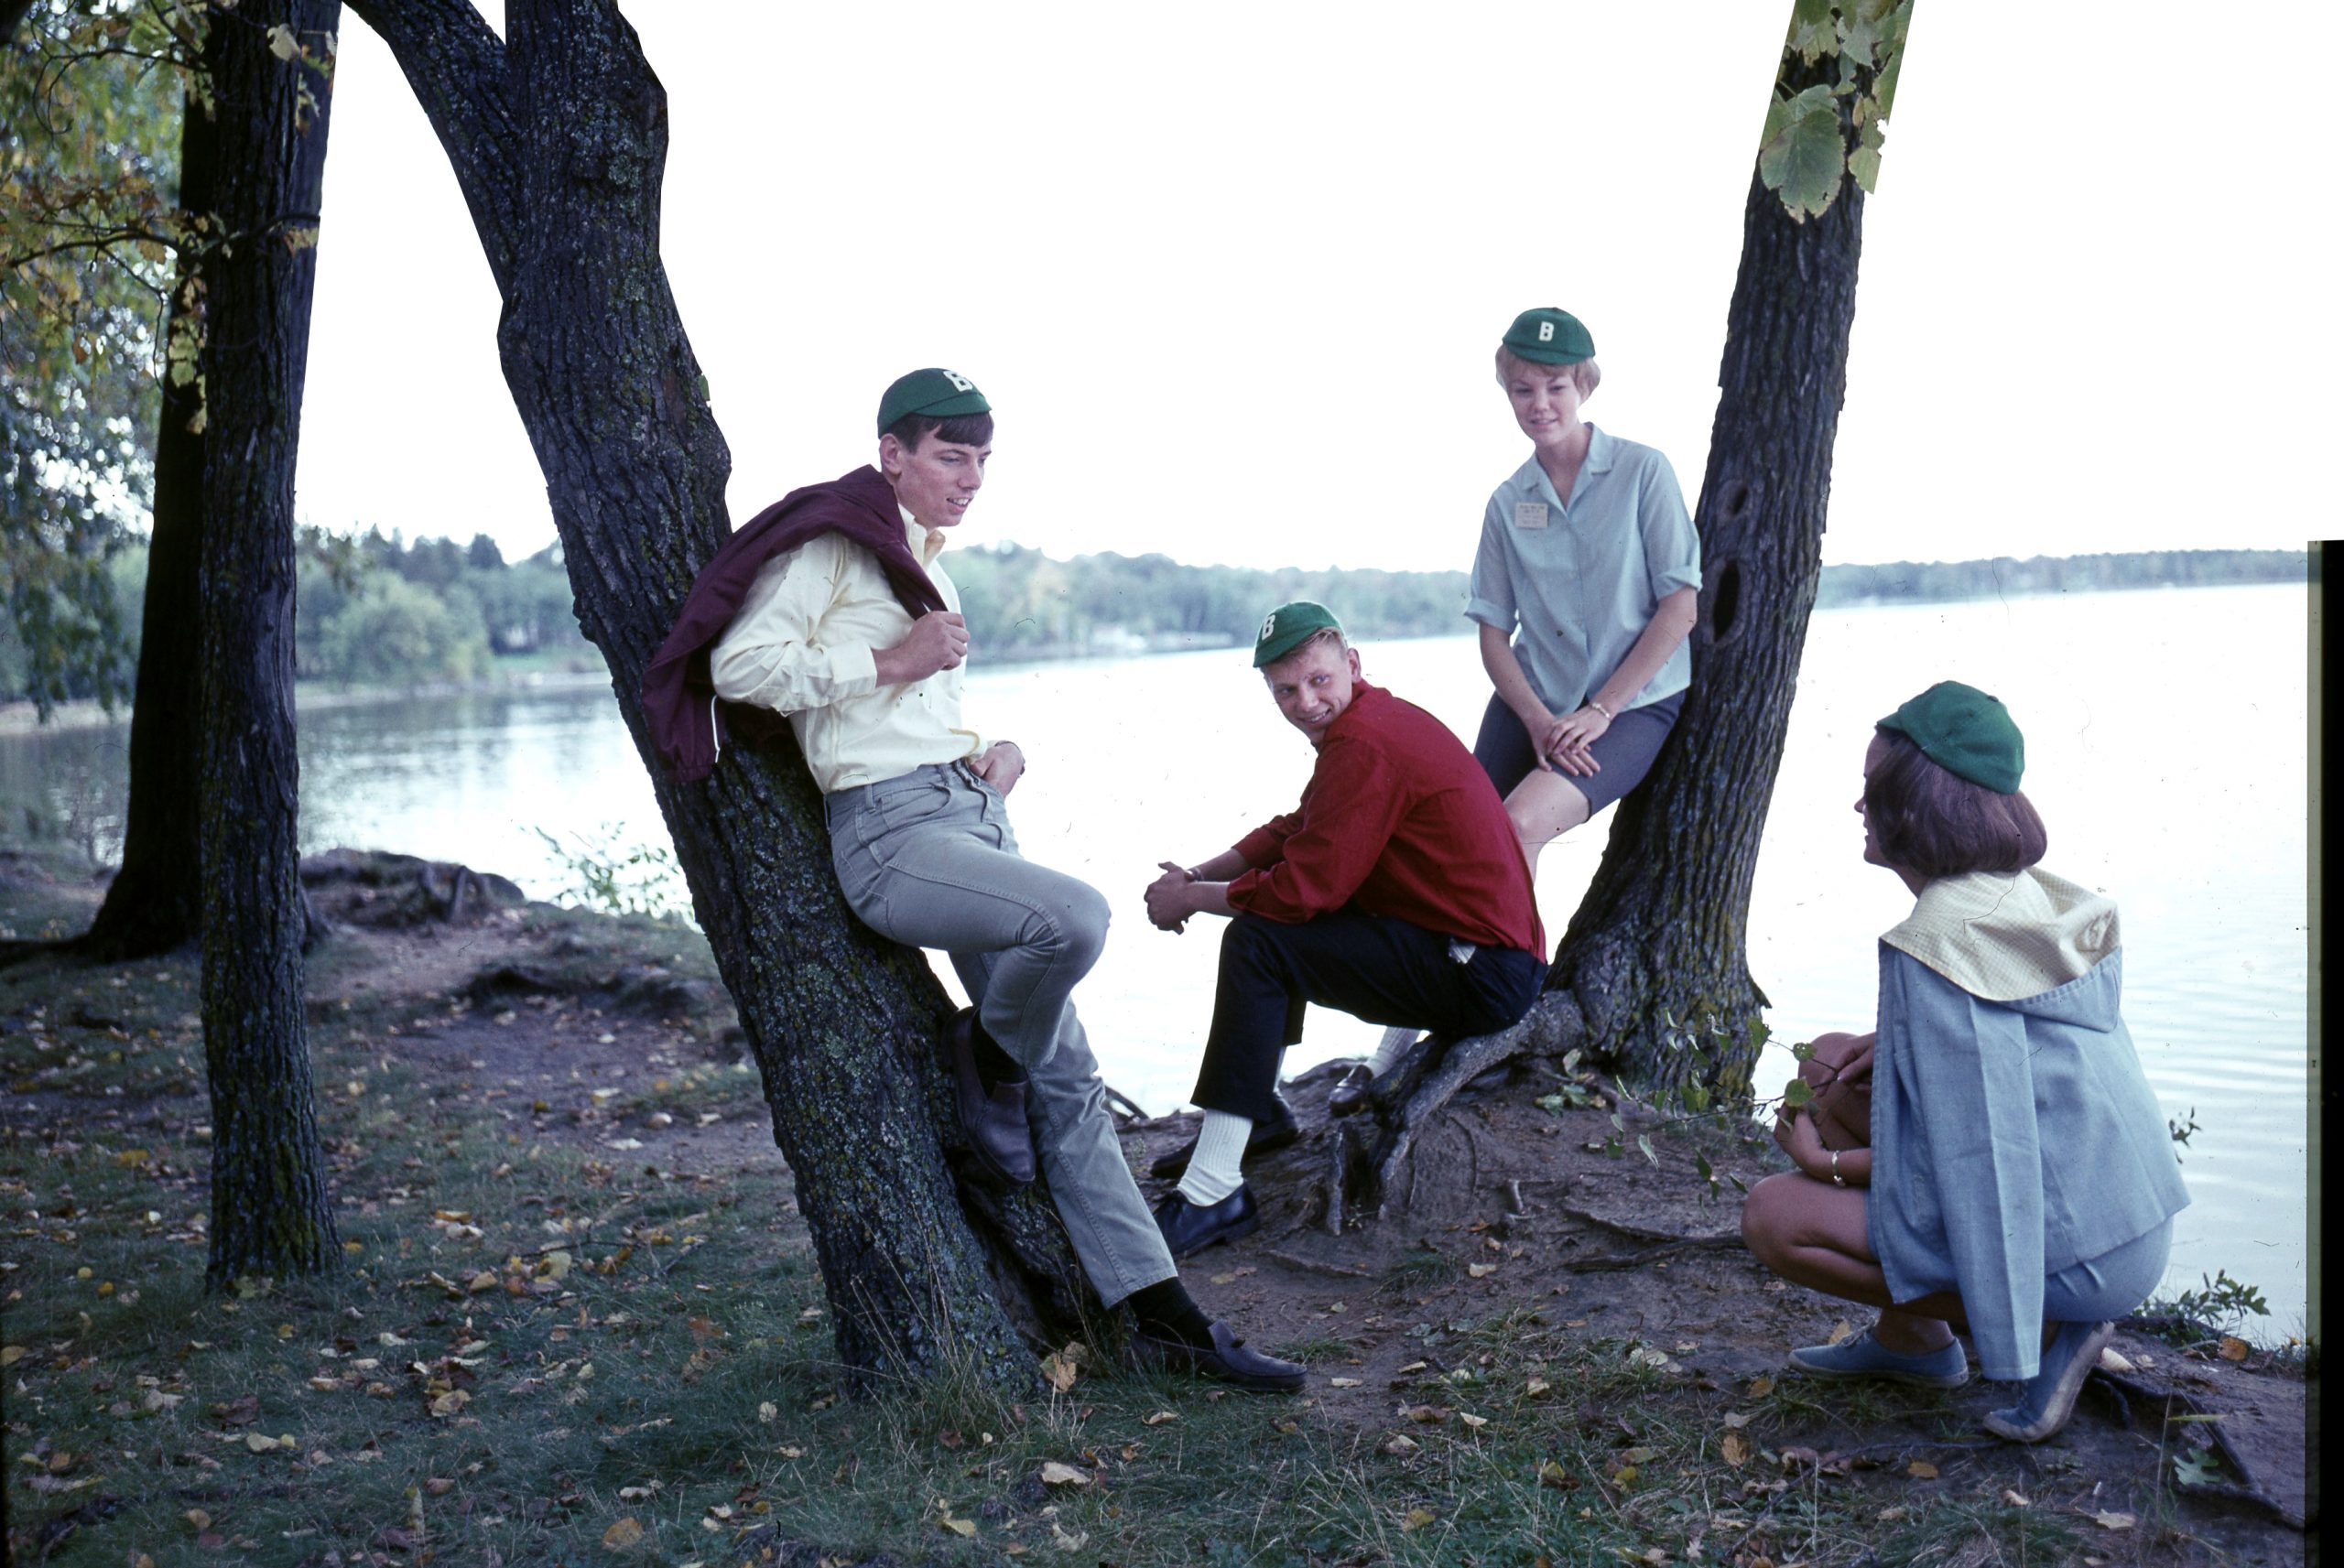 Freshman beanies on display by Lake Bemidji, 1970s.